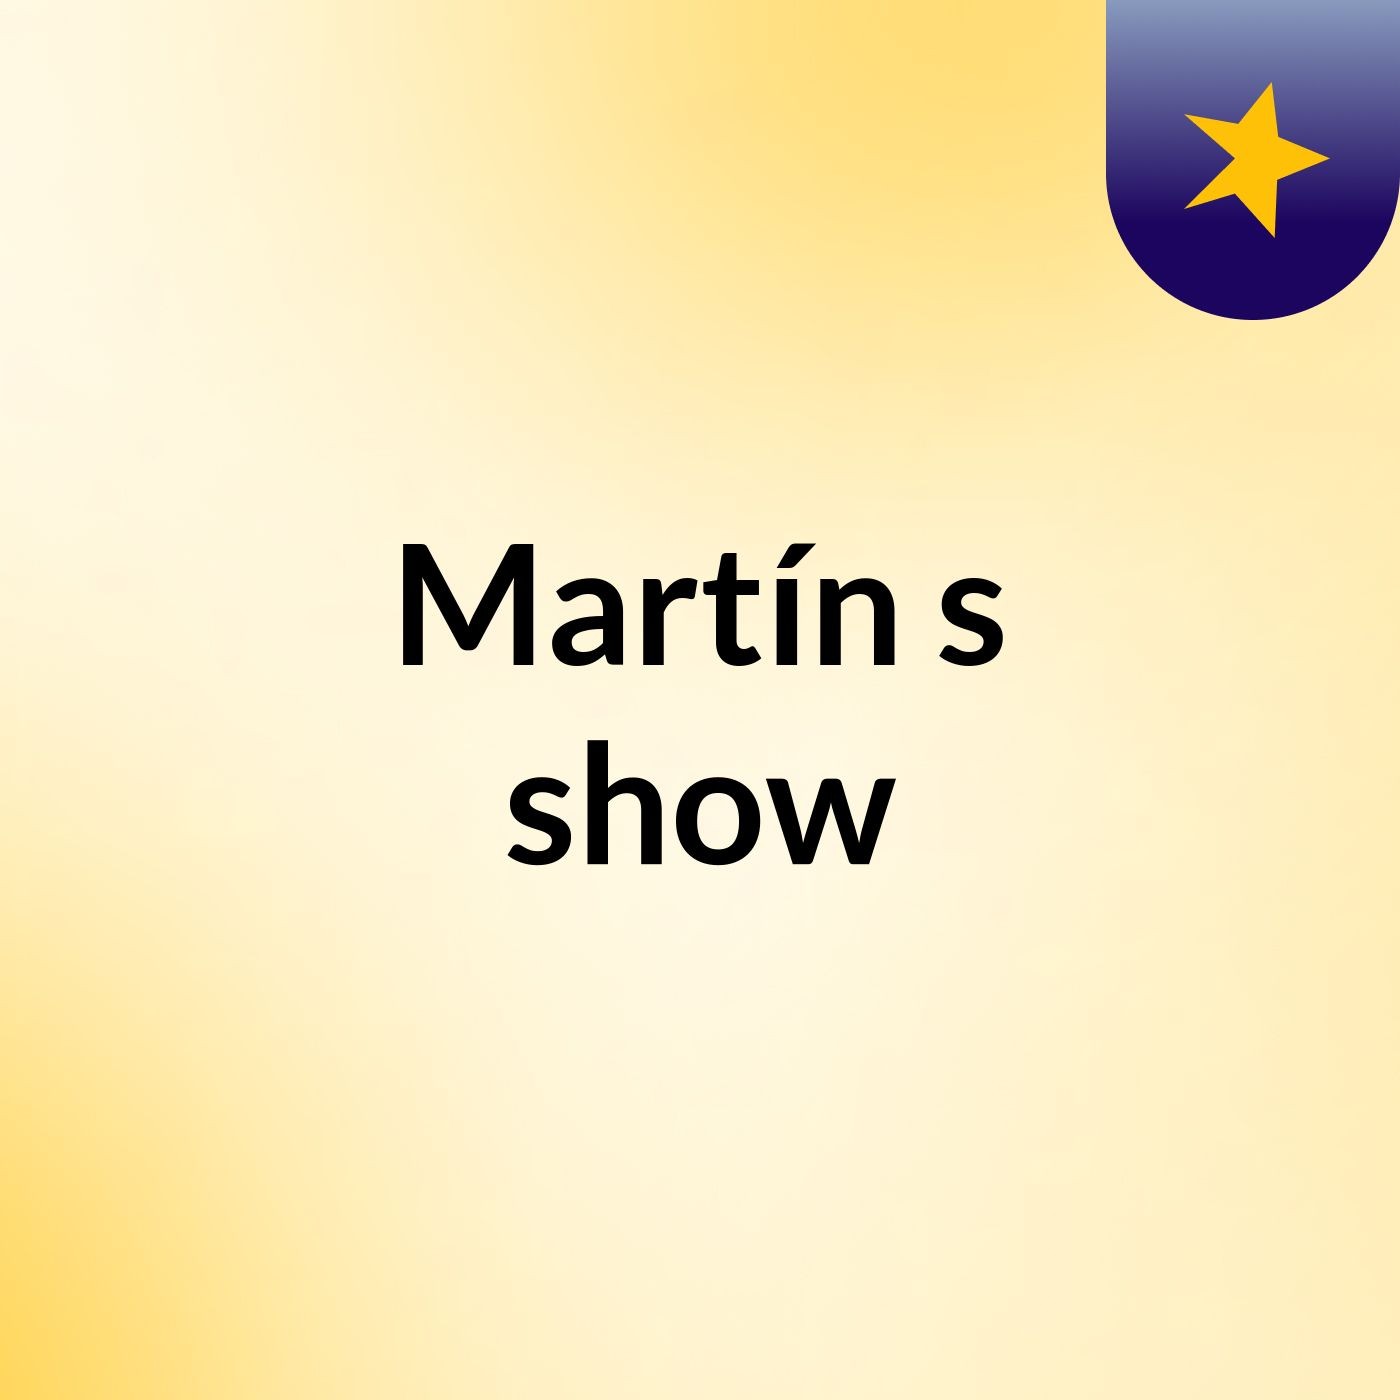 Martín's show